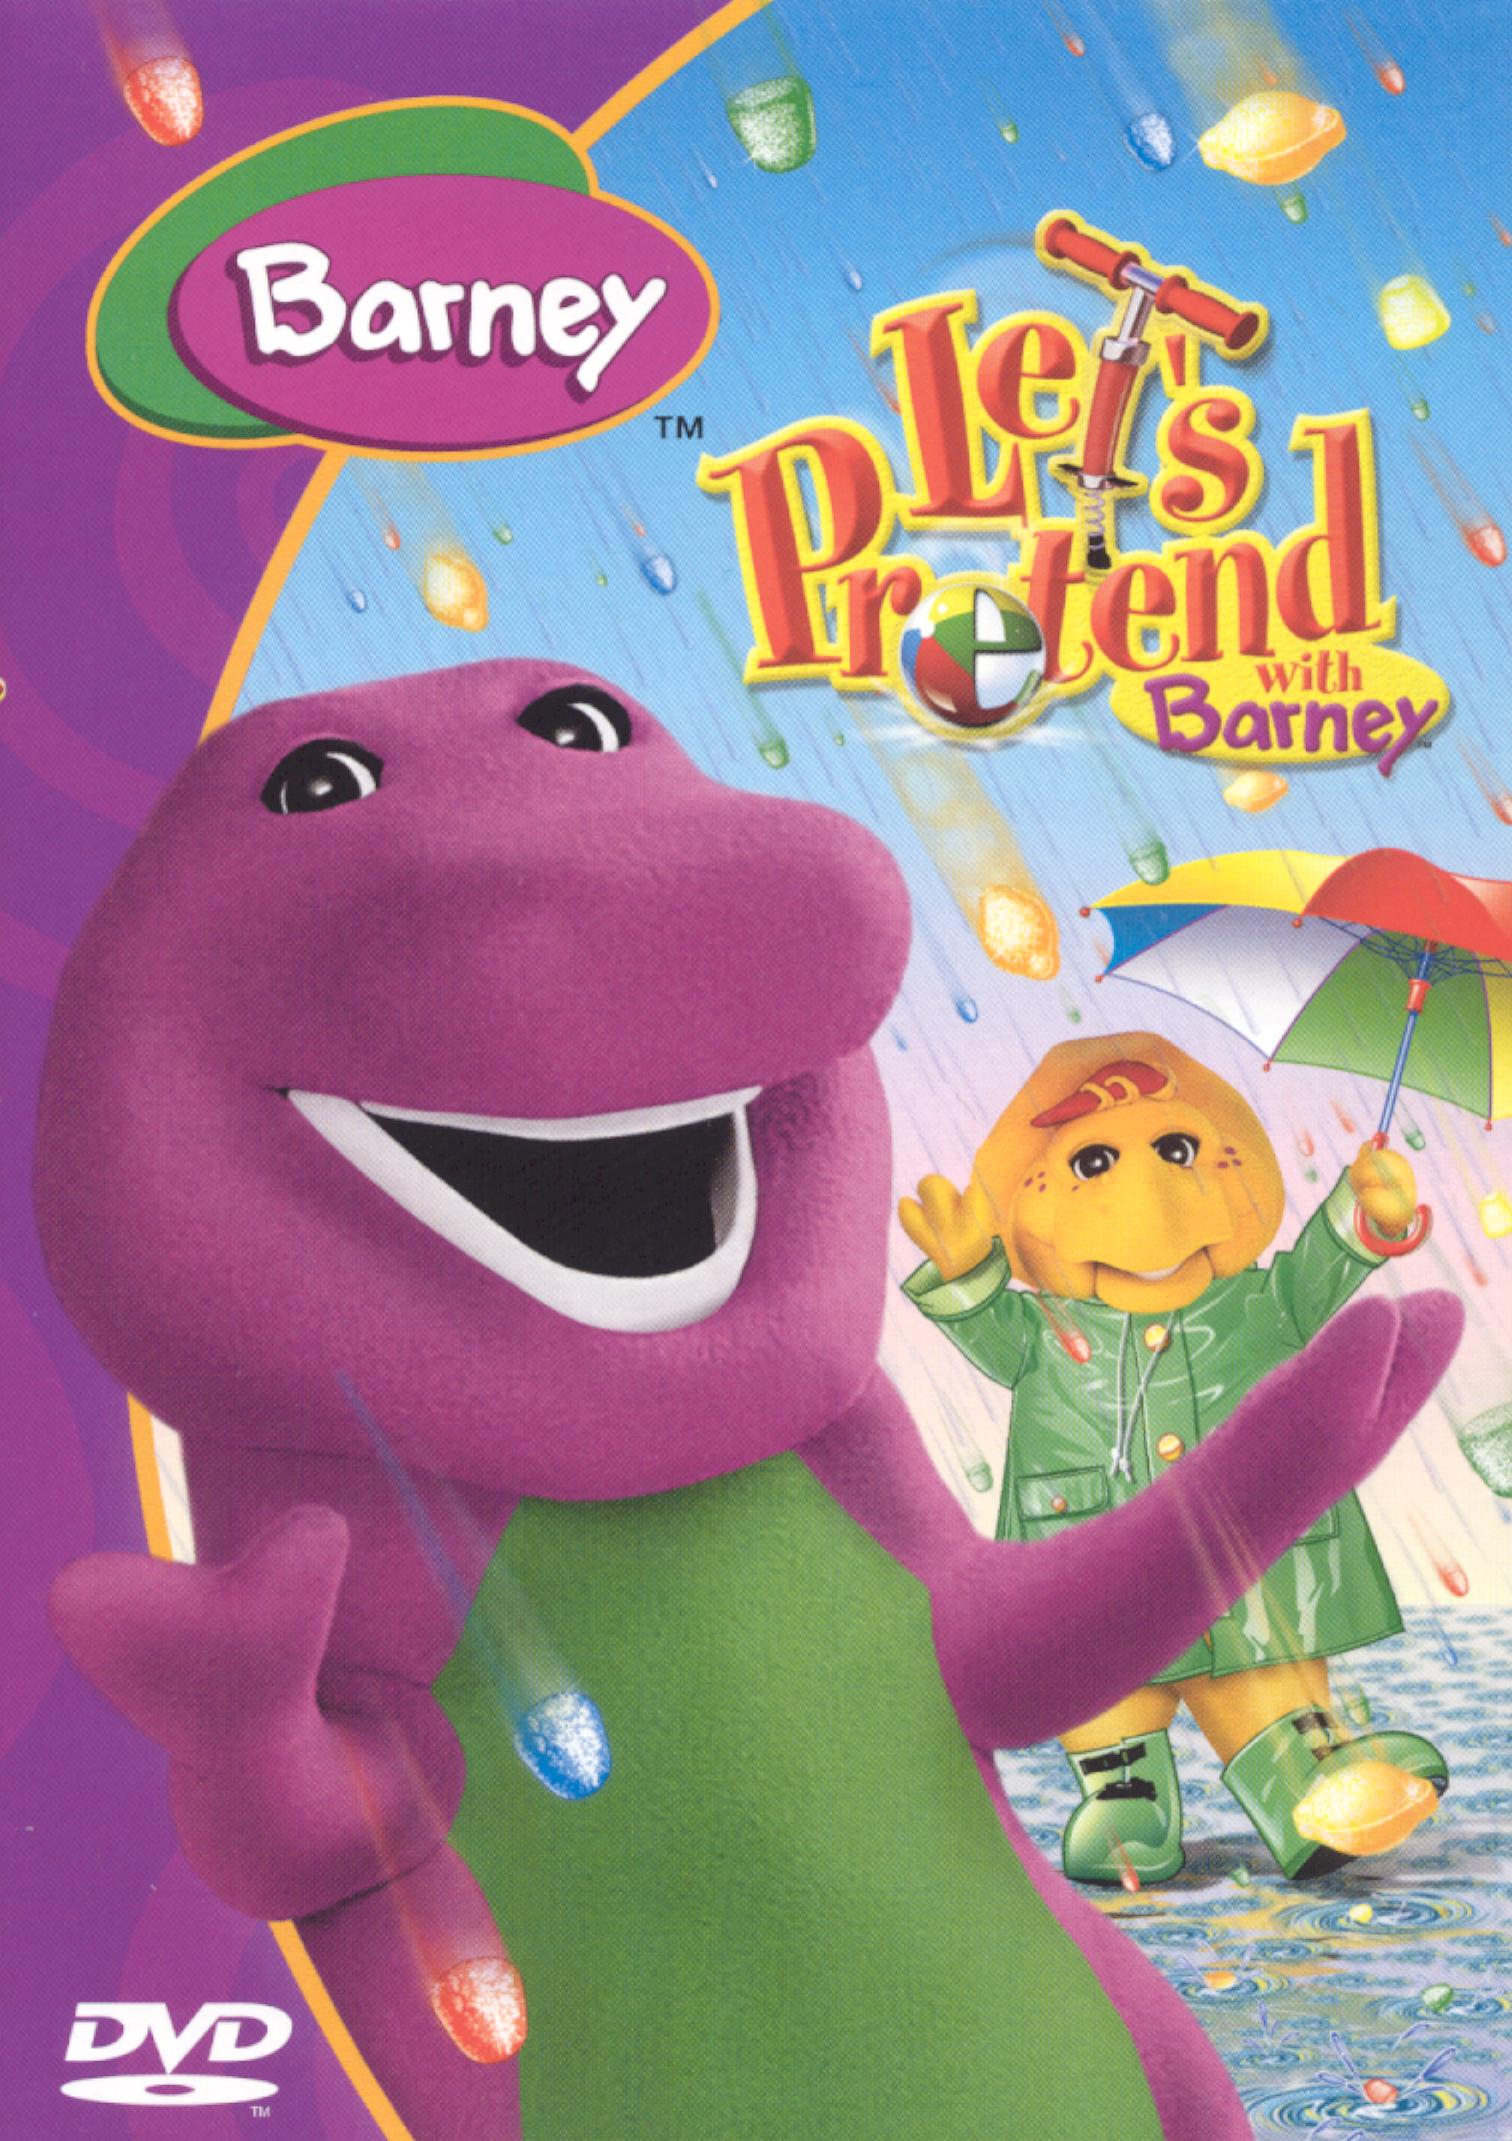 Barney: Let's Pretend With Barney DVD - Best Buy.